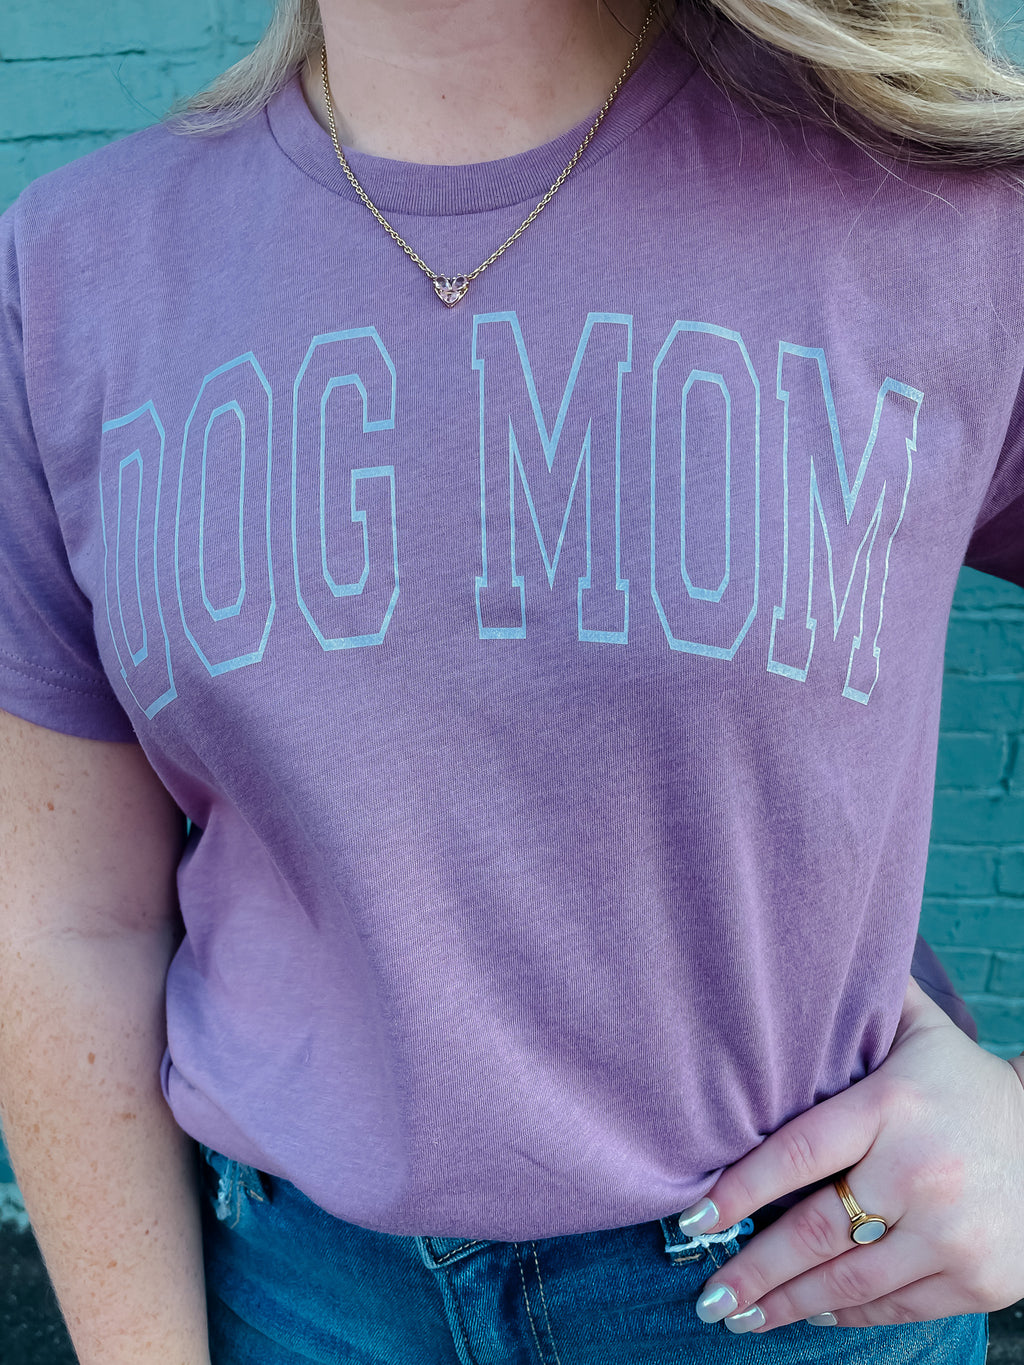 Dog Mom Graphic Tee (S-2XL)